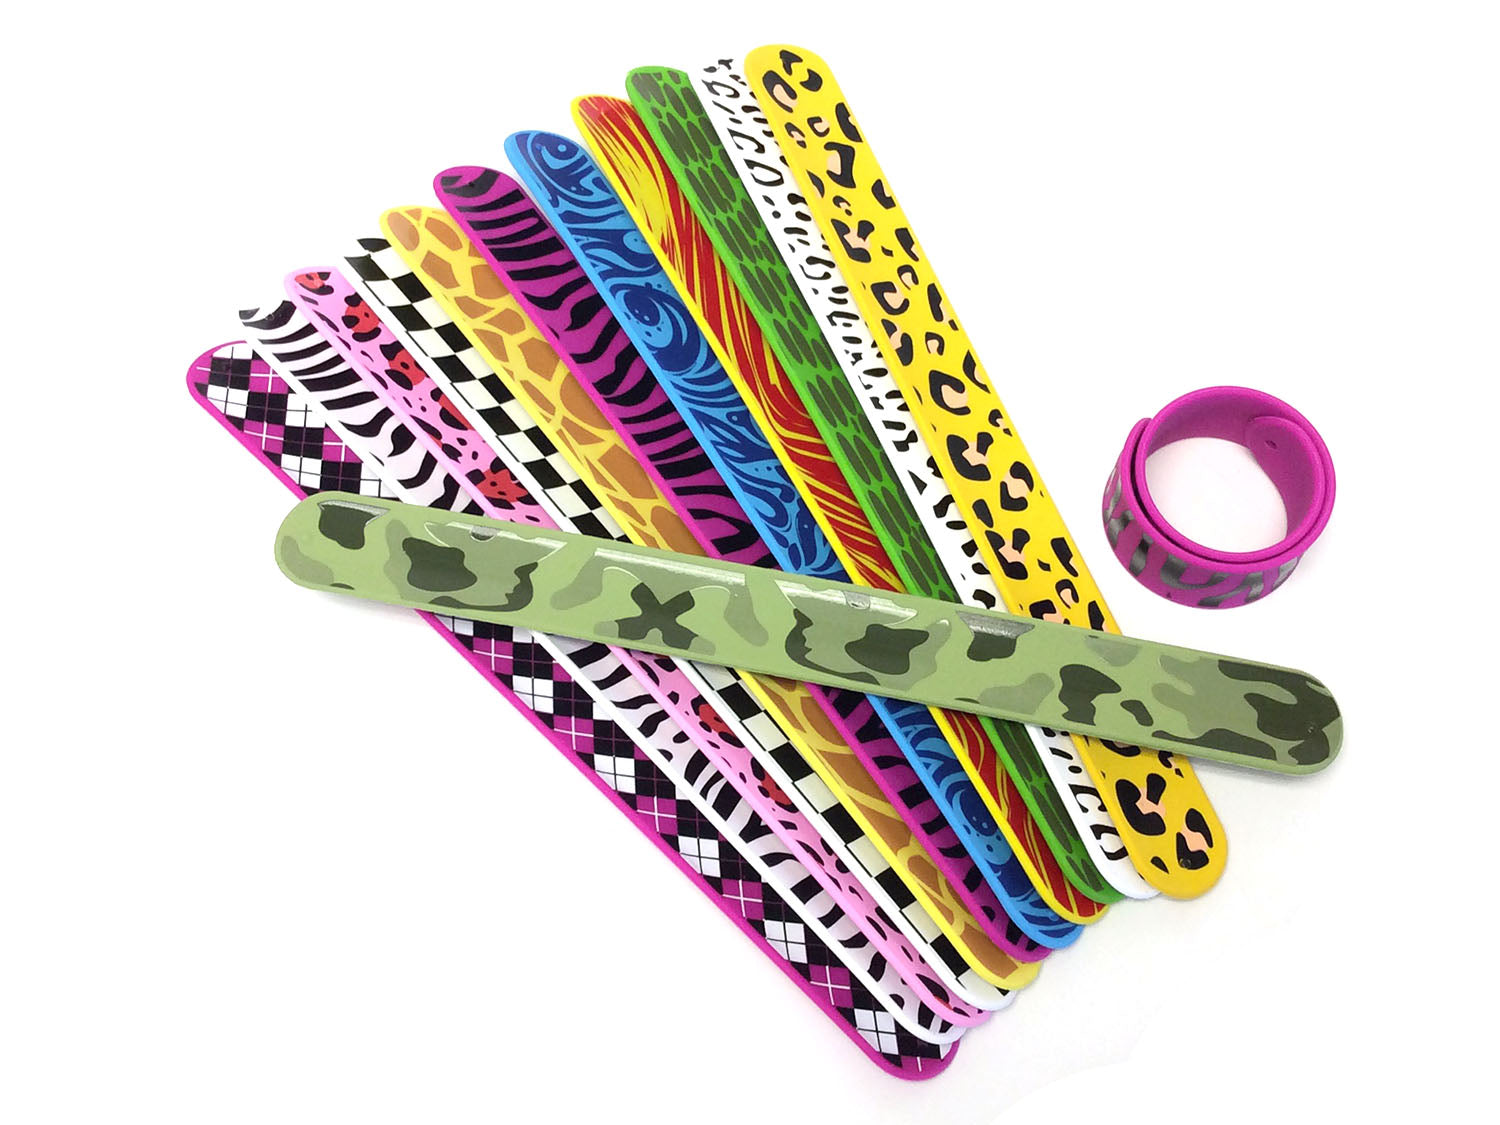 Amazon.com: 24 Pieces Ruler Slap Bracelets Bands Colorful Ruler Snap Bands  Wristband for Kids Classroom School Prize Party Favors : Toys & Games